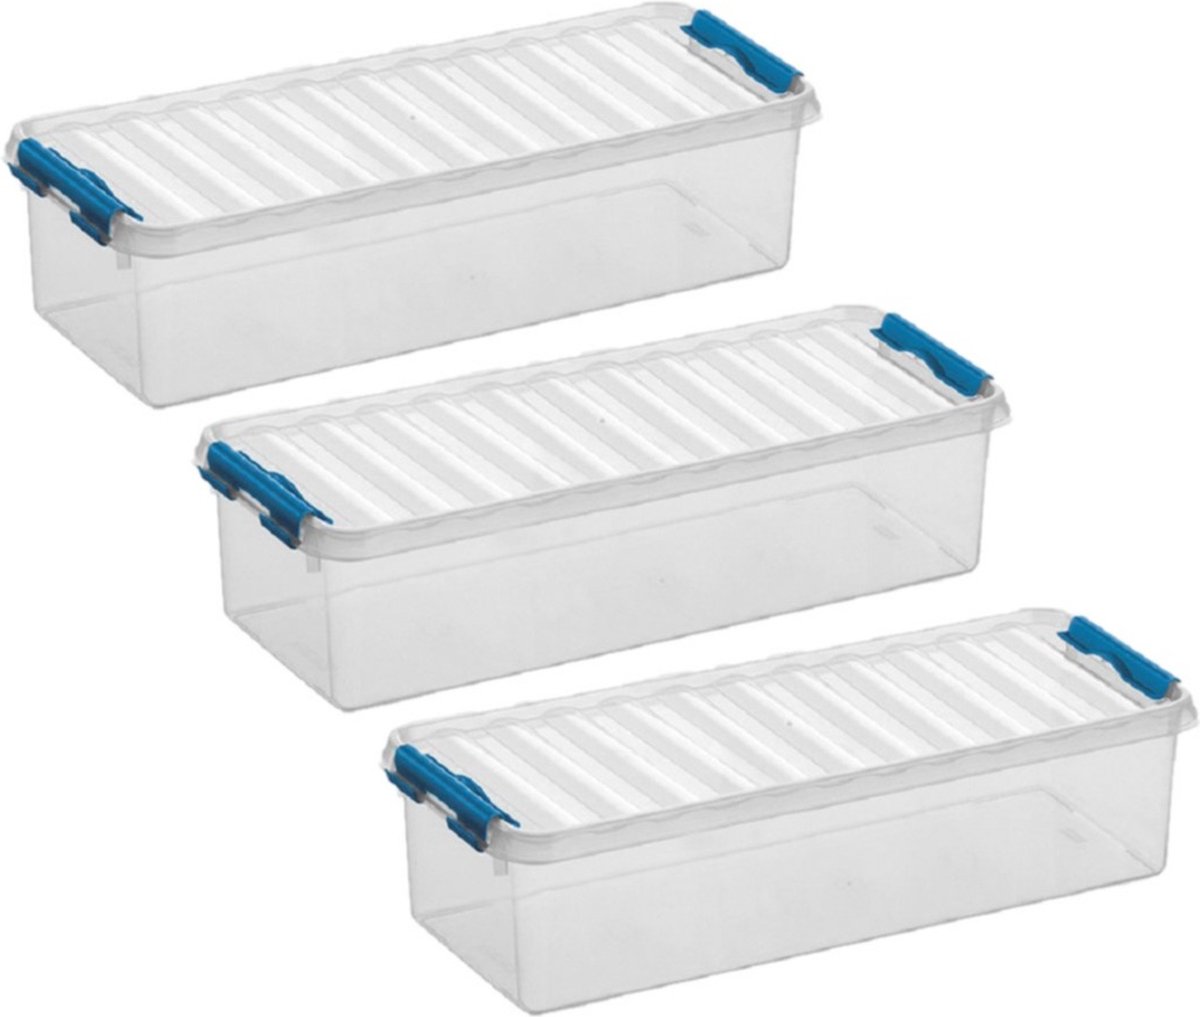 4x stuks opberg box/opbergdoos 3.5 liter 38.5 x 14 x 9.2 cm - Opslagbox - Opbergbak kunststof transparant/blauw